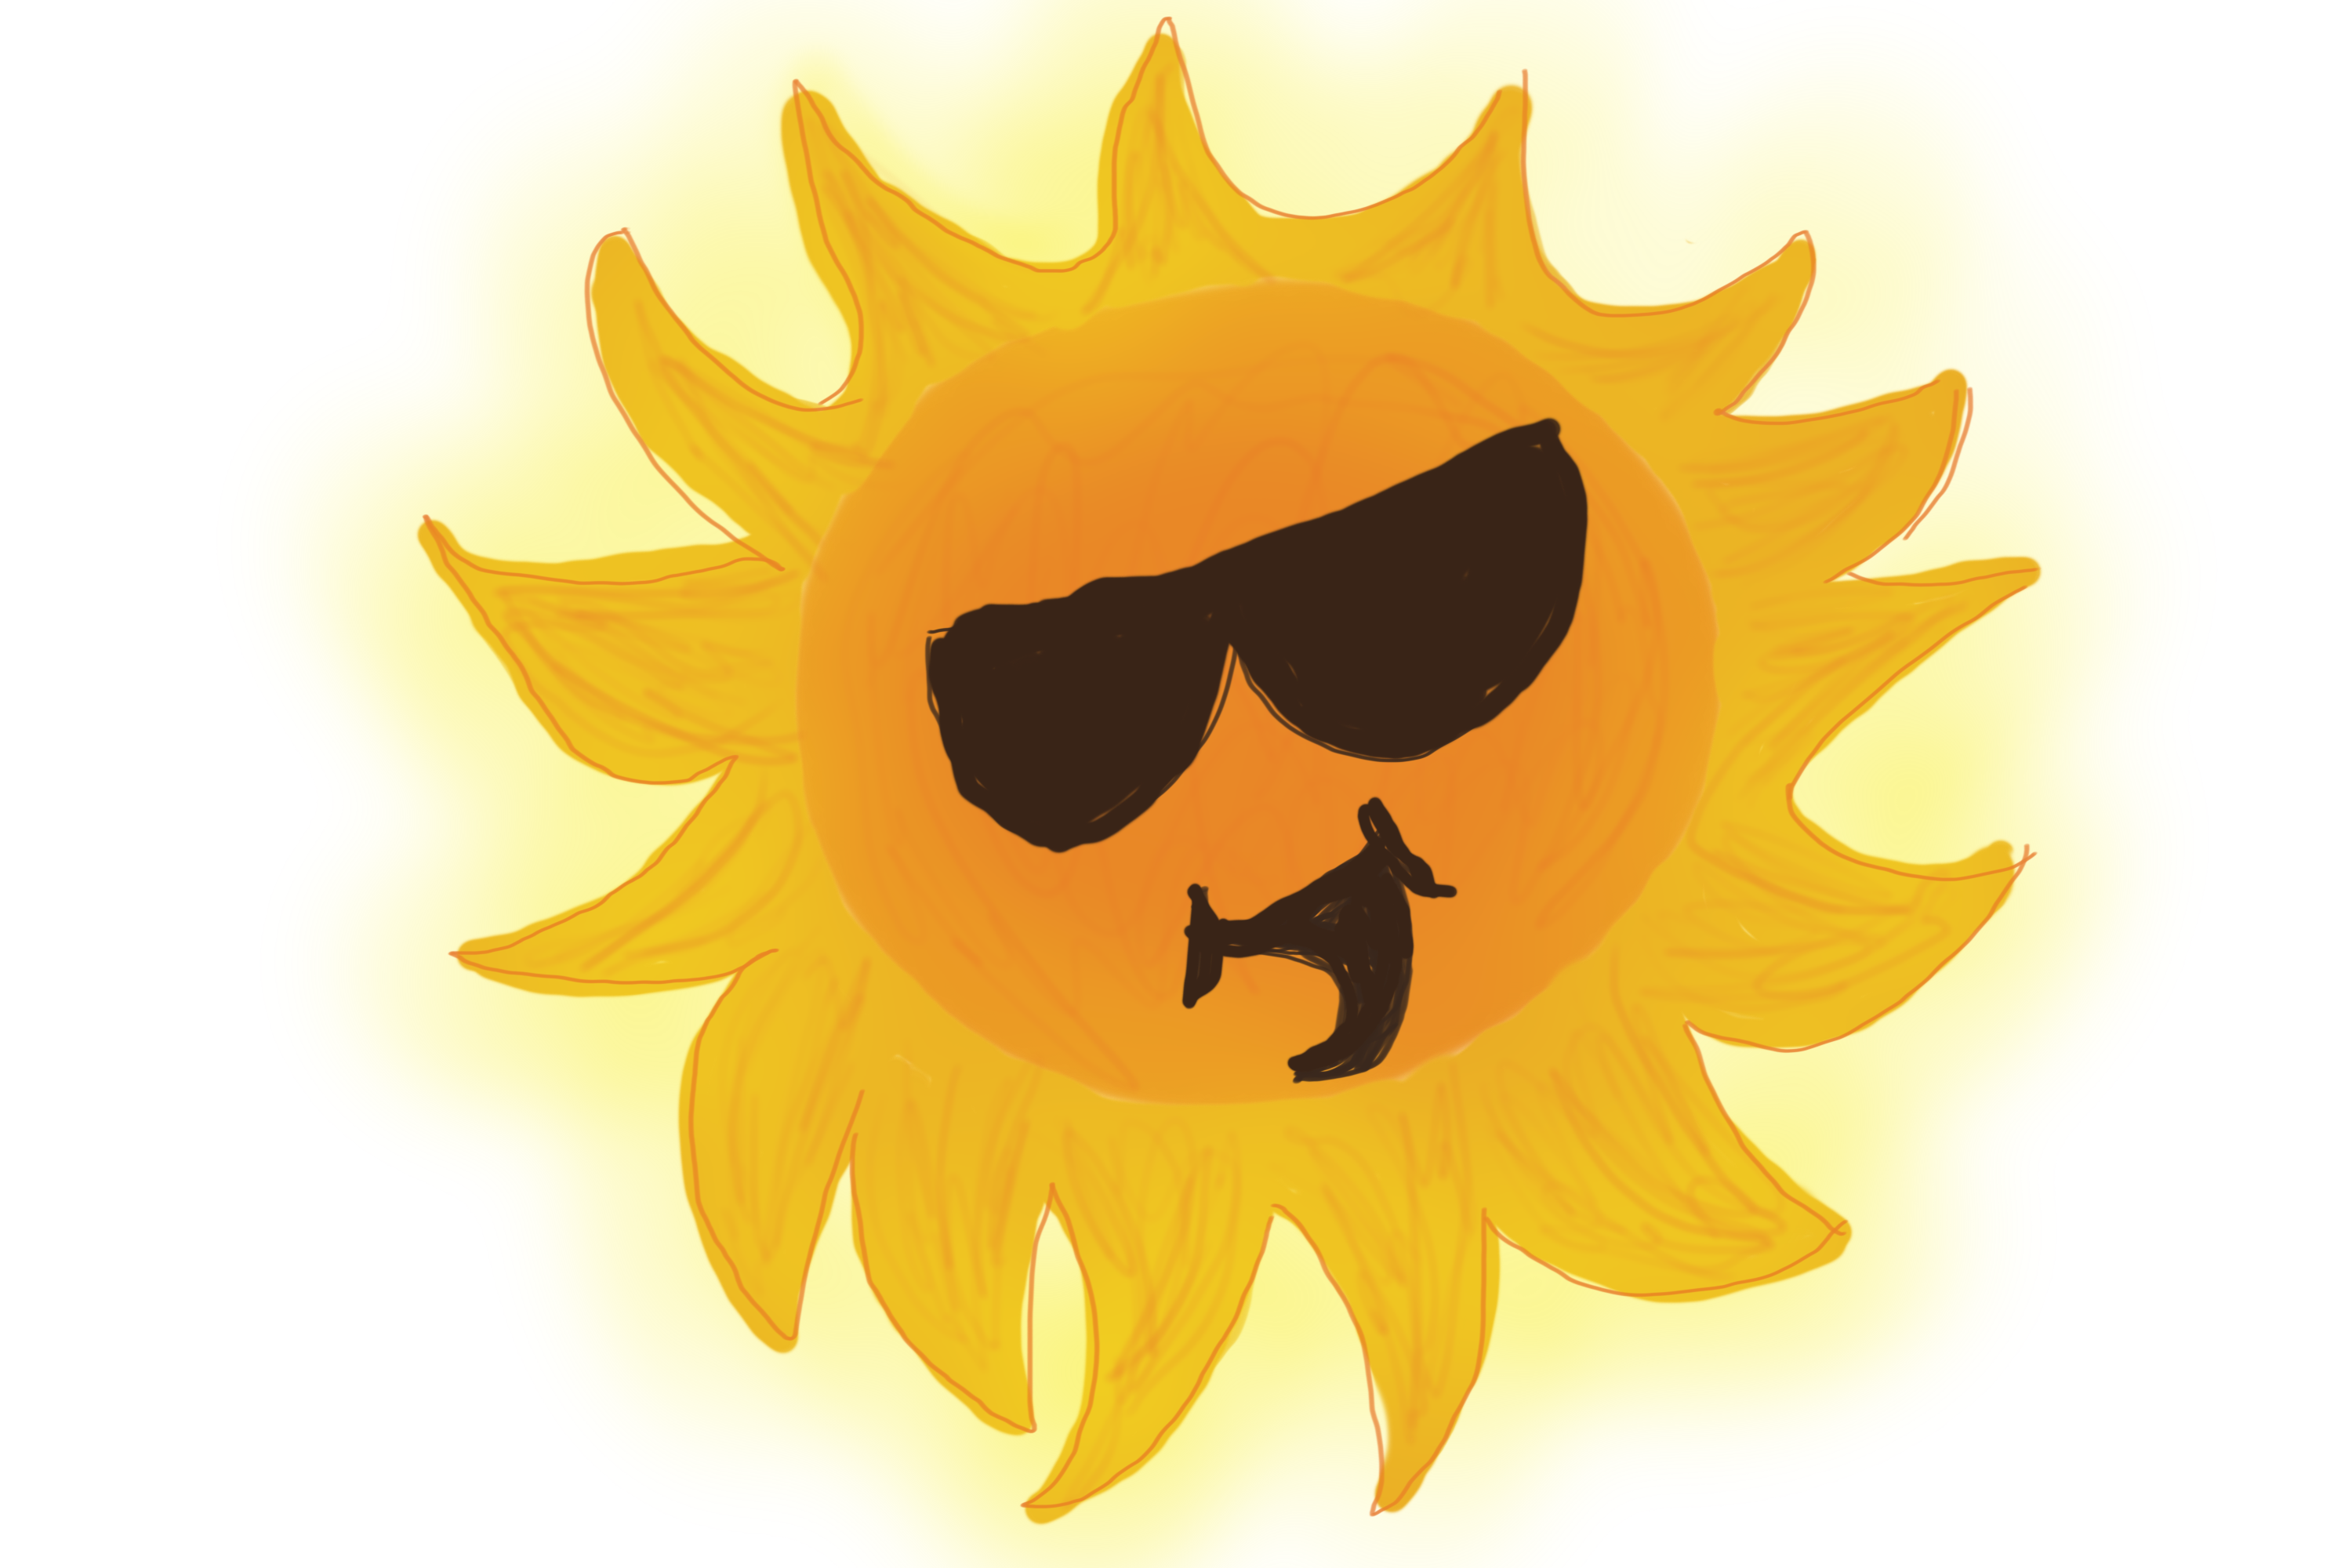 goofy sun wearing sunglasses